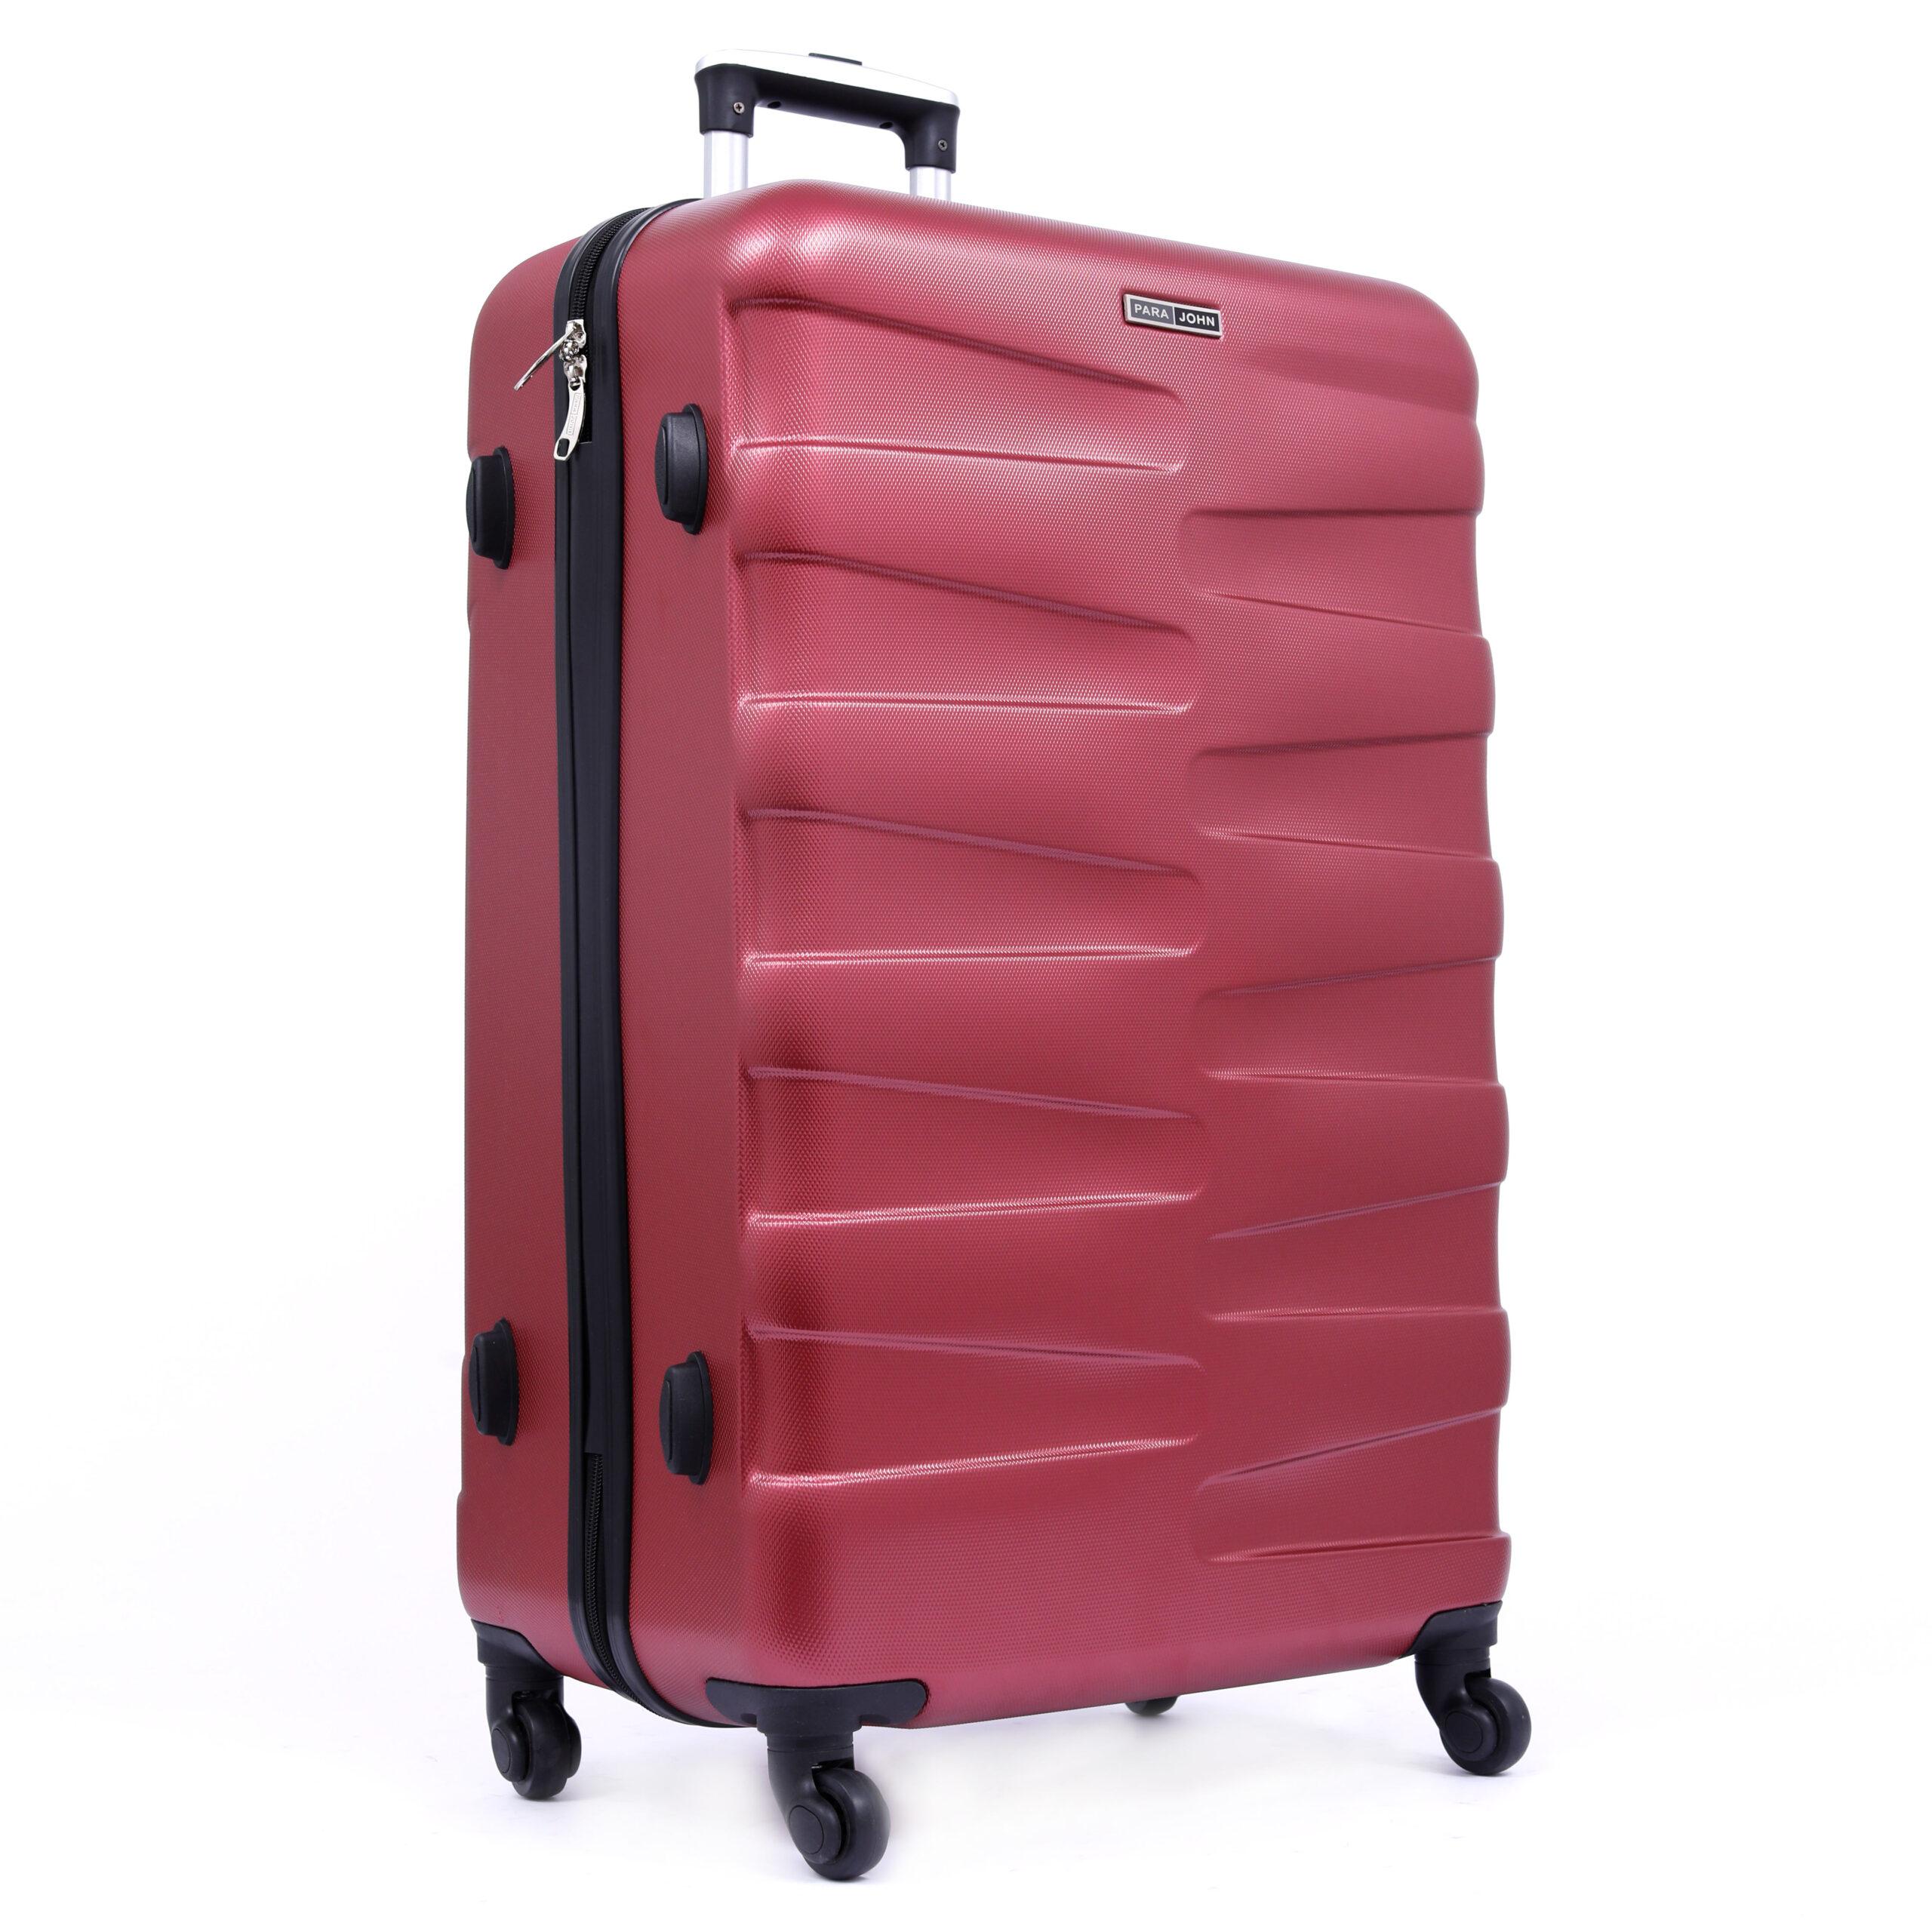 طقم حقائب سفر 3 حقائب مادة ABS بعجلات دوارة (20 ، 24 ، 28) بوصة أحمر PARA JOHN - Travel Luggage Suitcase Set of 3 -  Trolley Bag, Carry On Hand Cabin Luggage Bag (20 ، 24 ، 28) inch - cG9zdDo0MzgwODE=